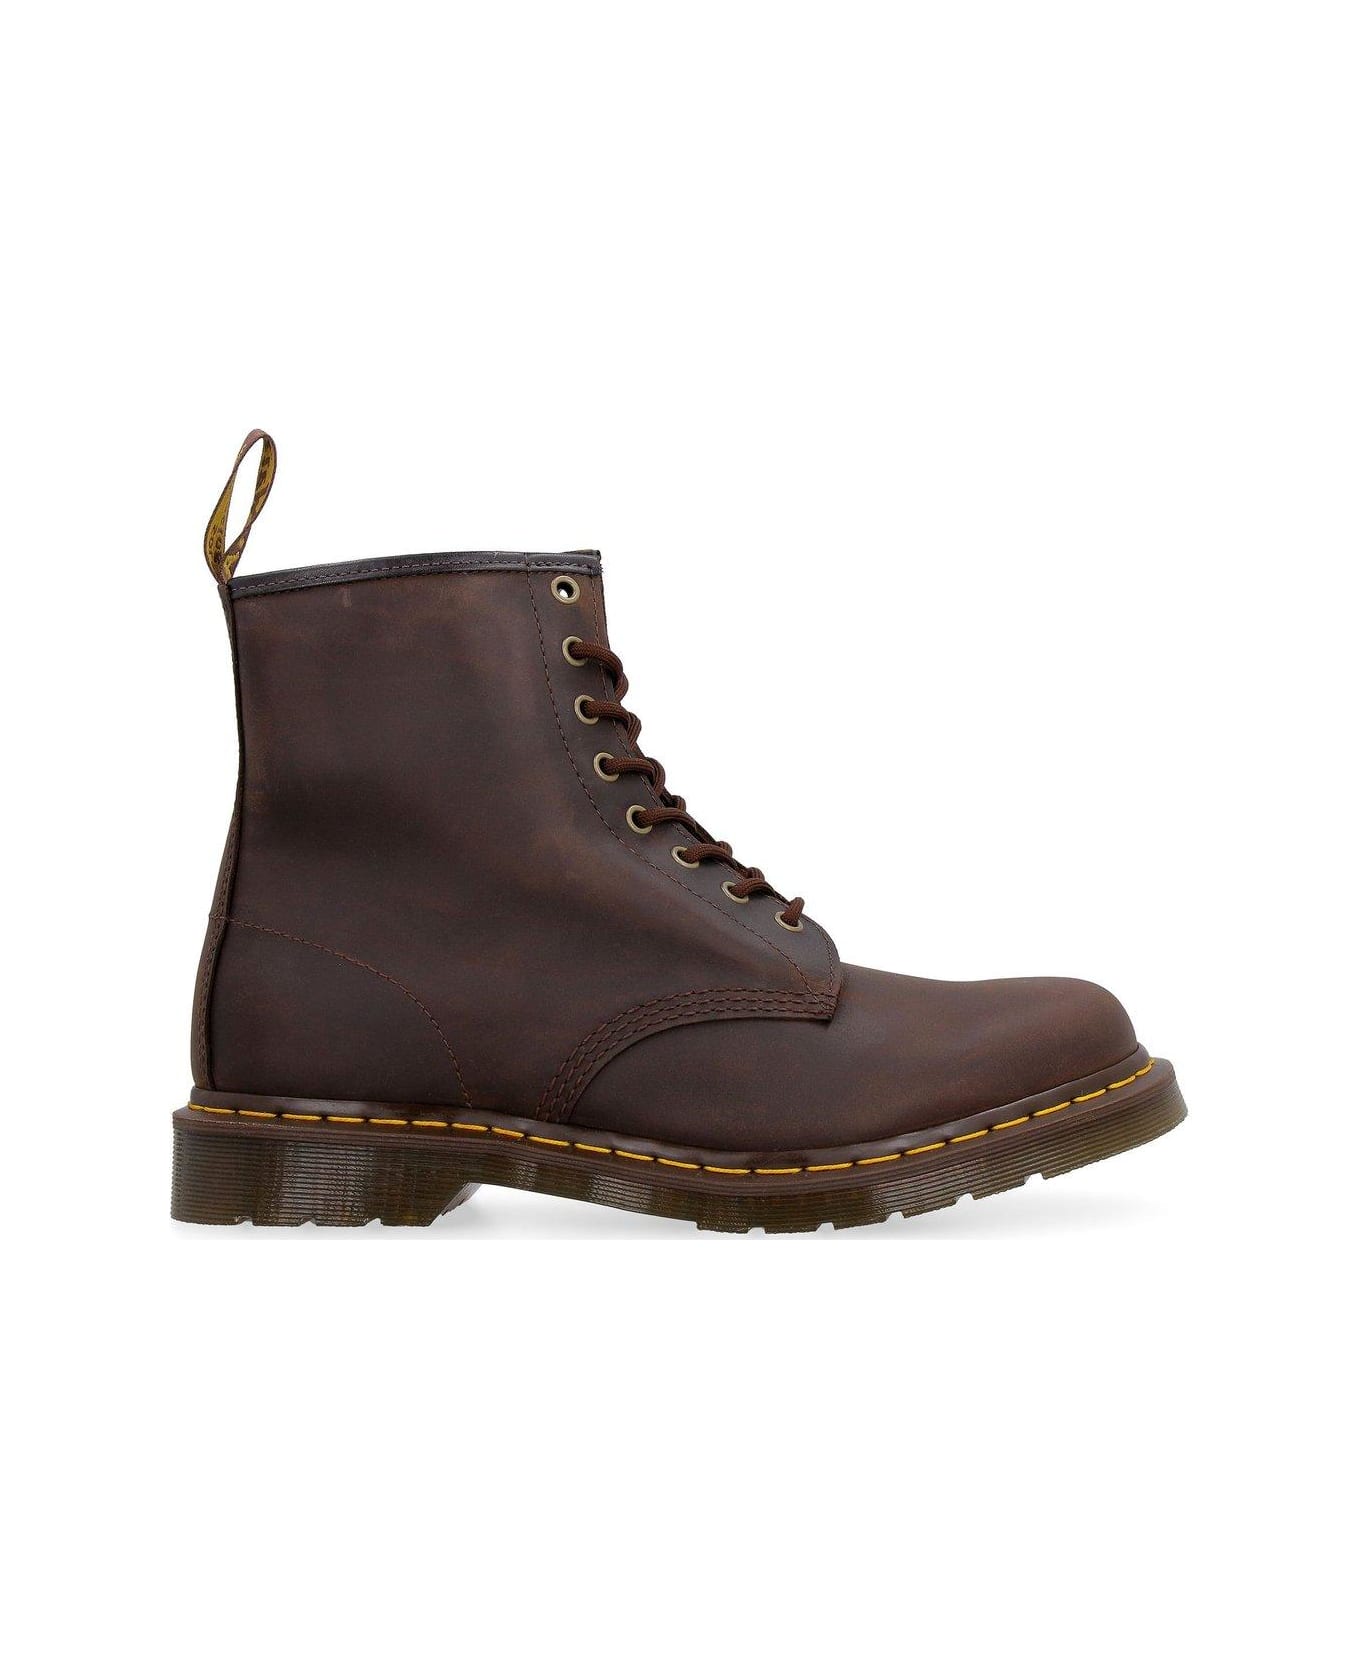 Dr. Martens 1460 Combat Boots - brown